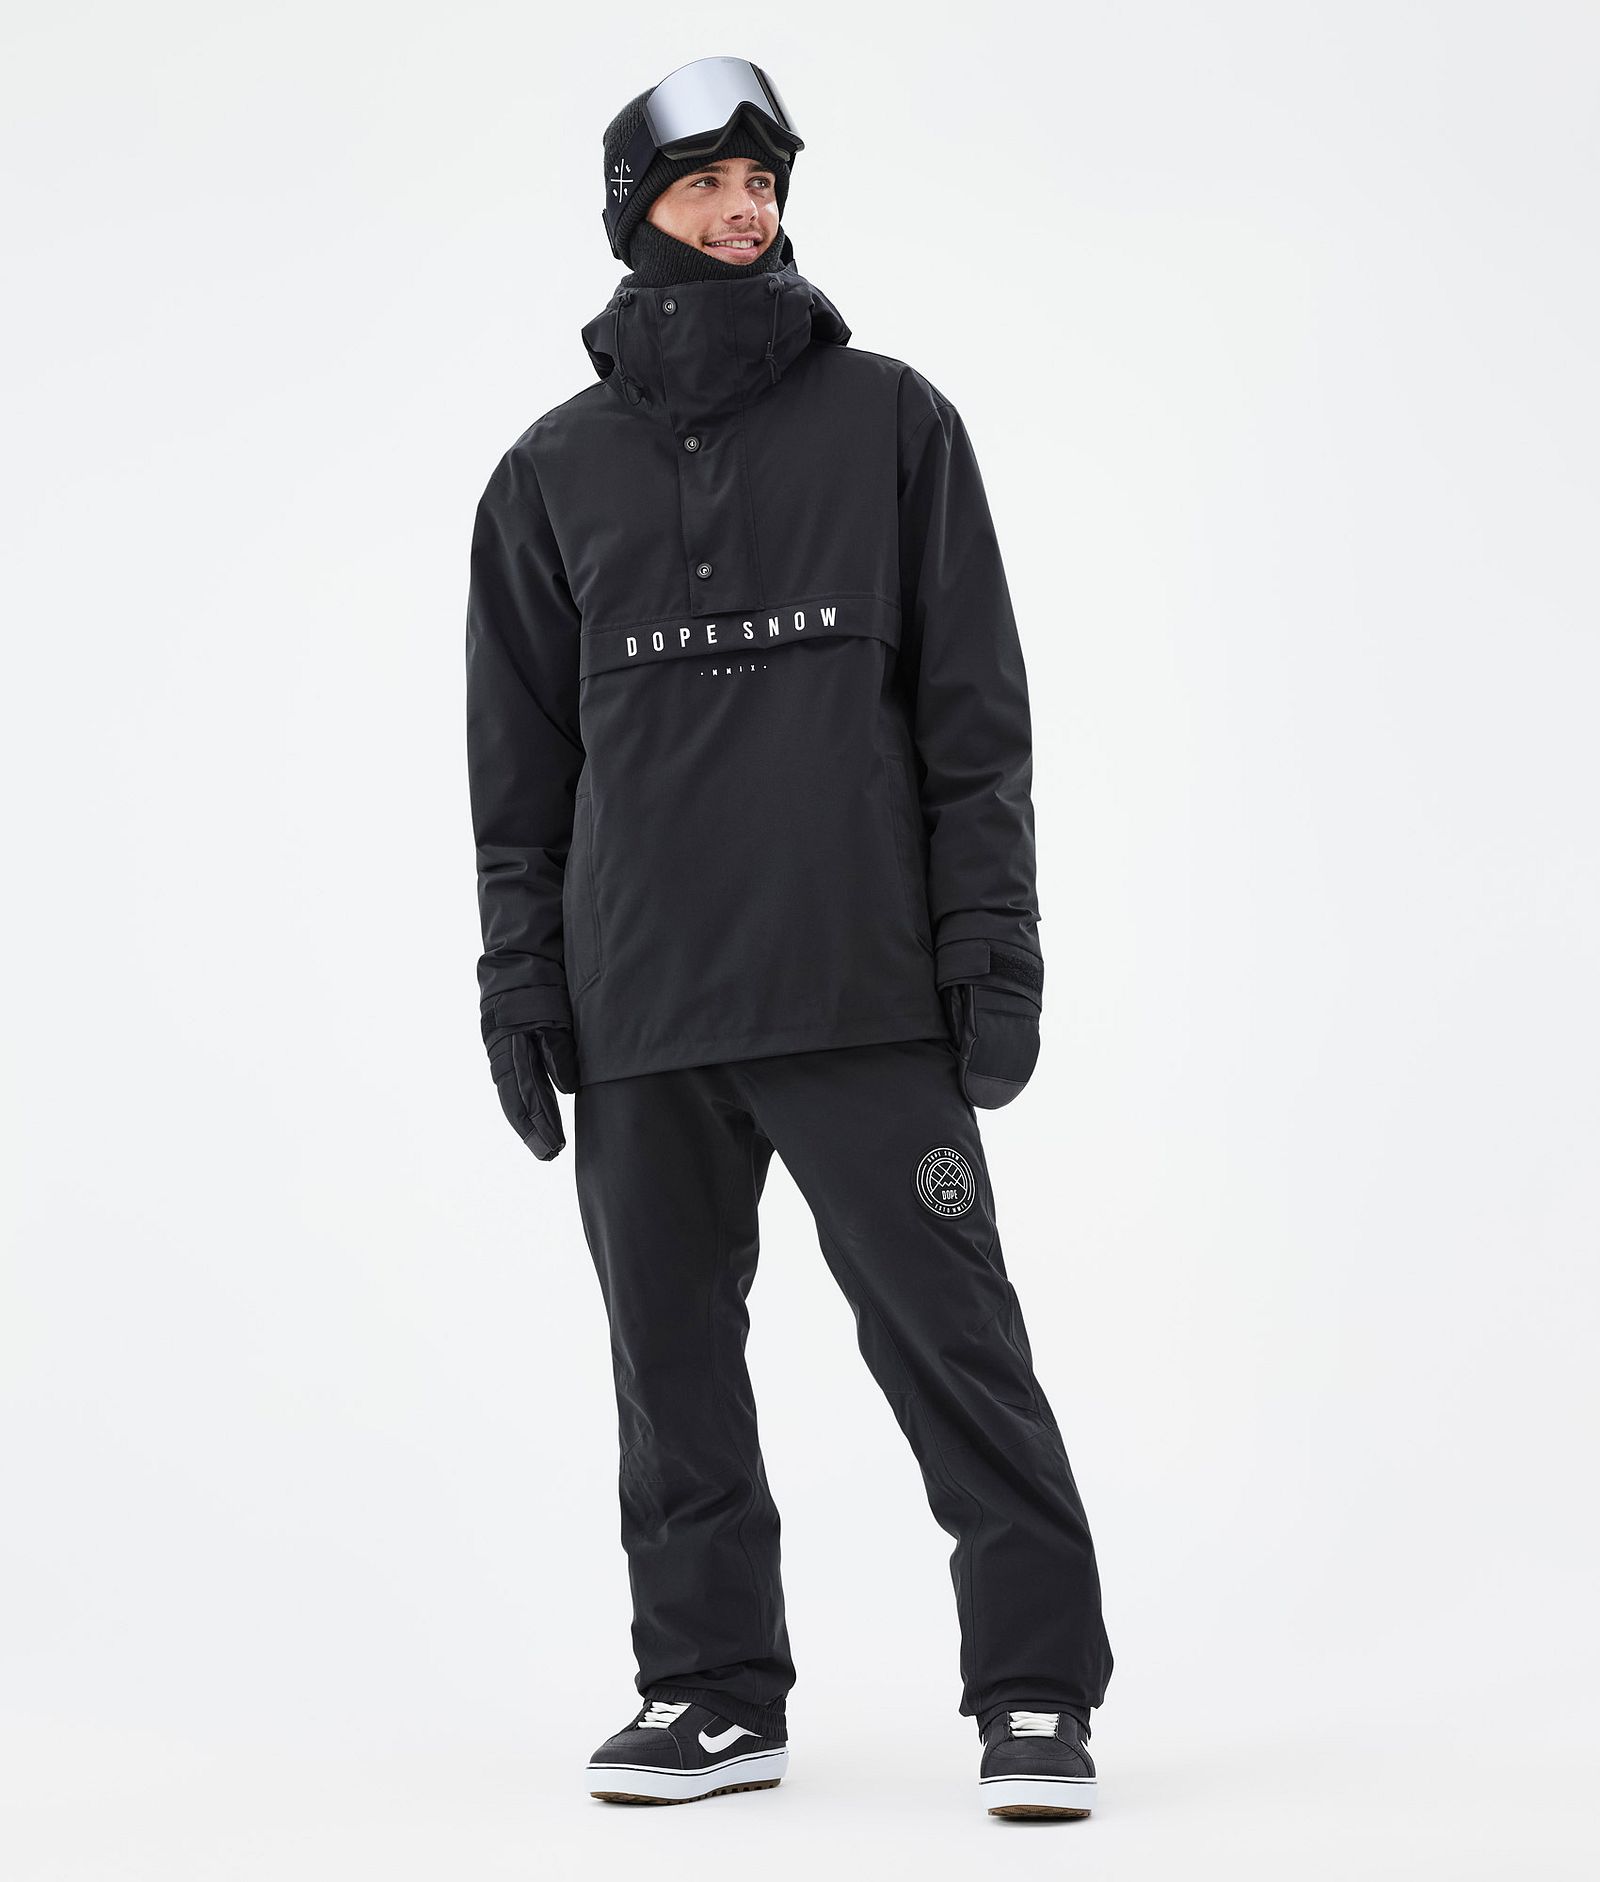 Dope Legacy Outfit Snowboard Uomo Black/Black